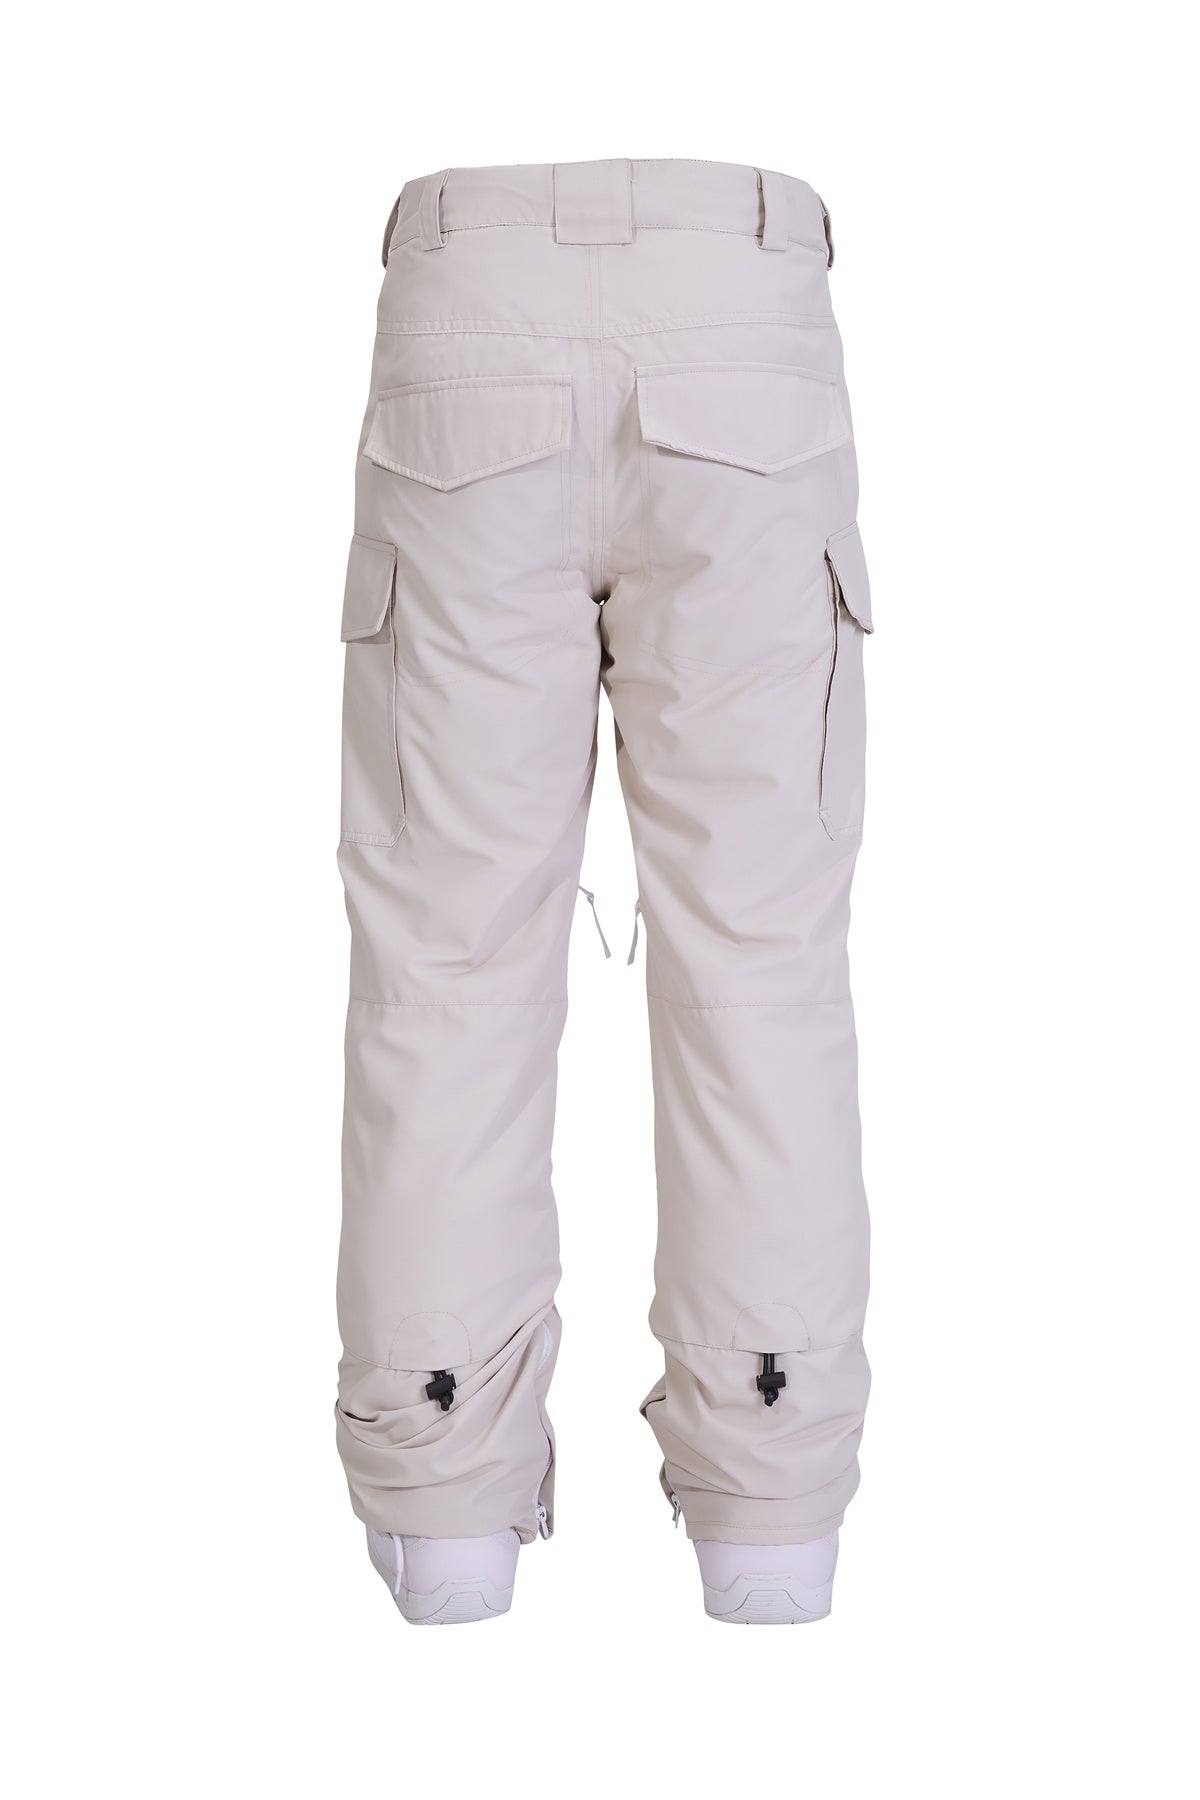 Swiss Tech Men's Cargo Snow Pants, Size S-5XL 